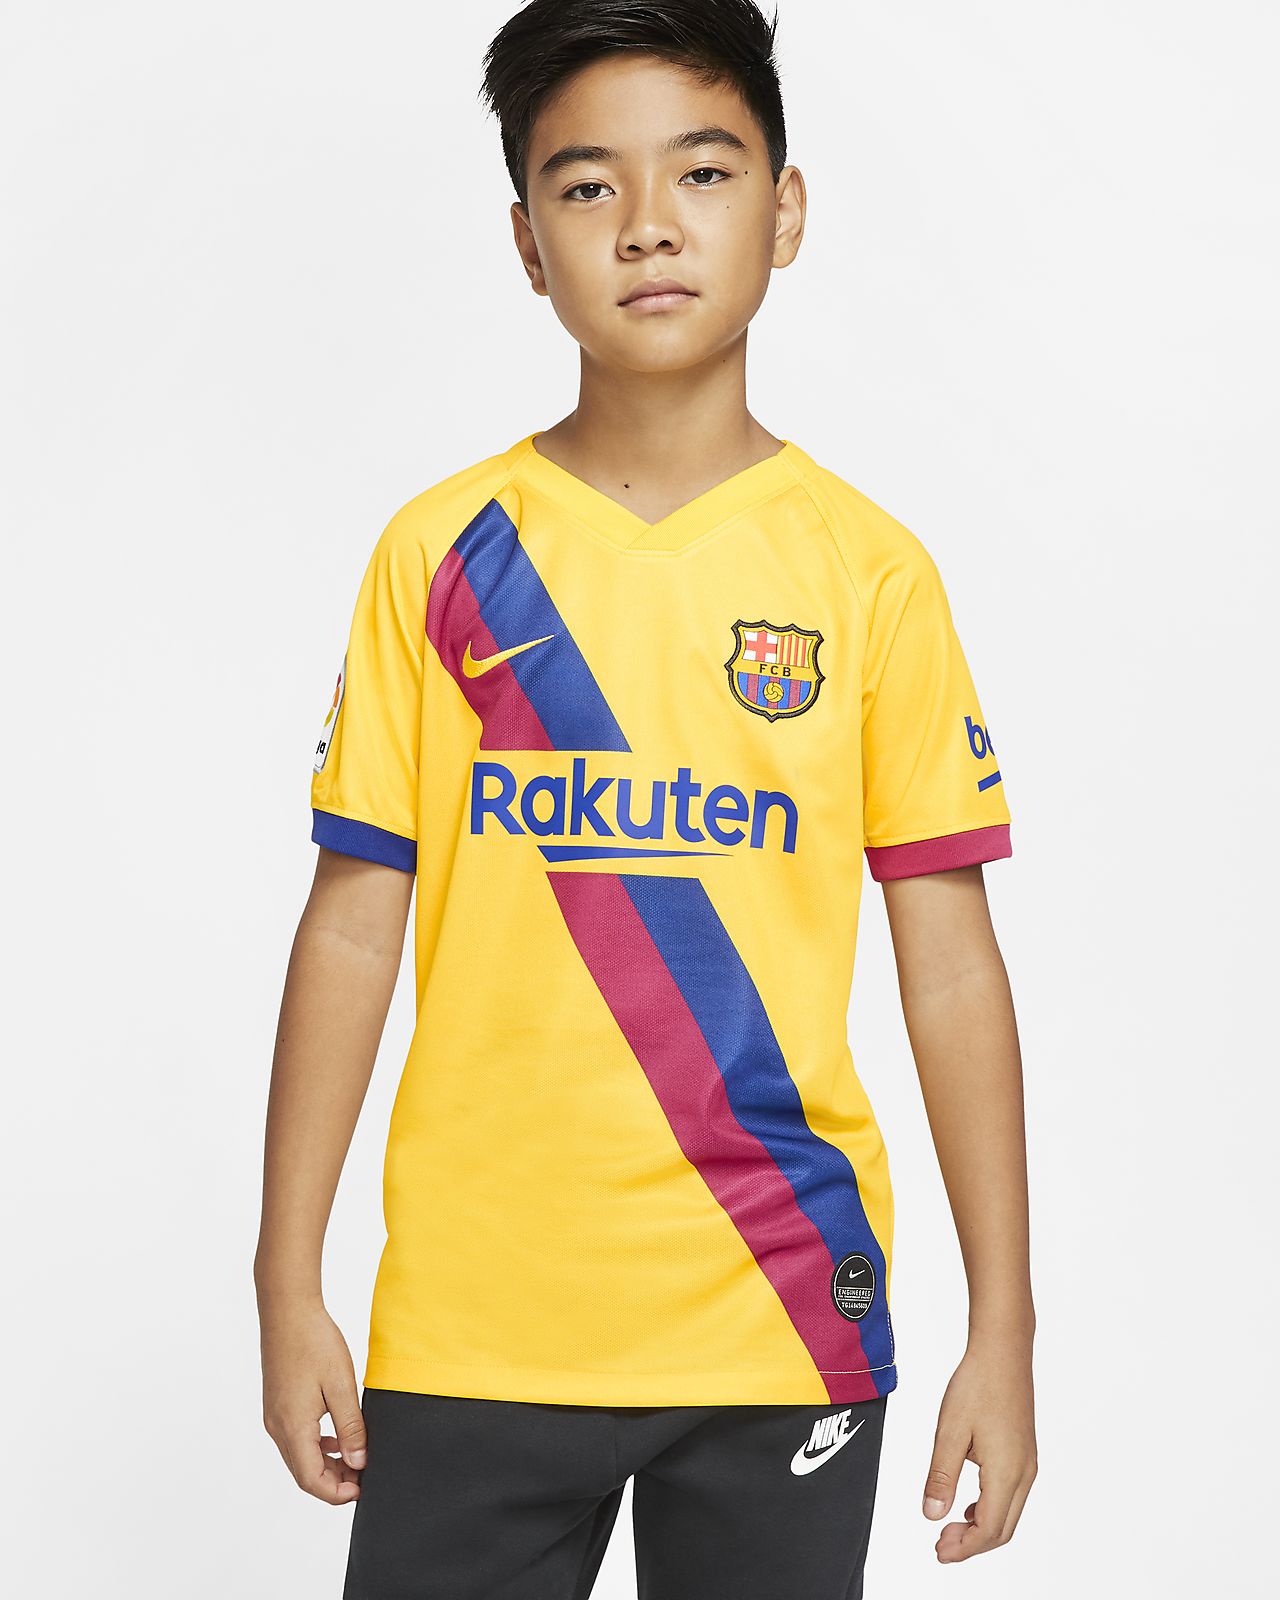 barcelona 2019 away jersey